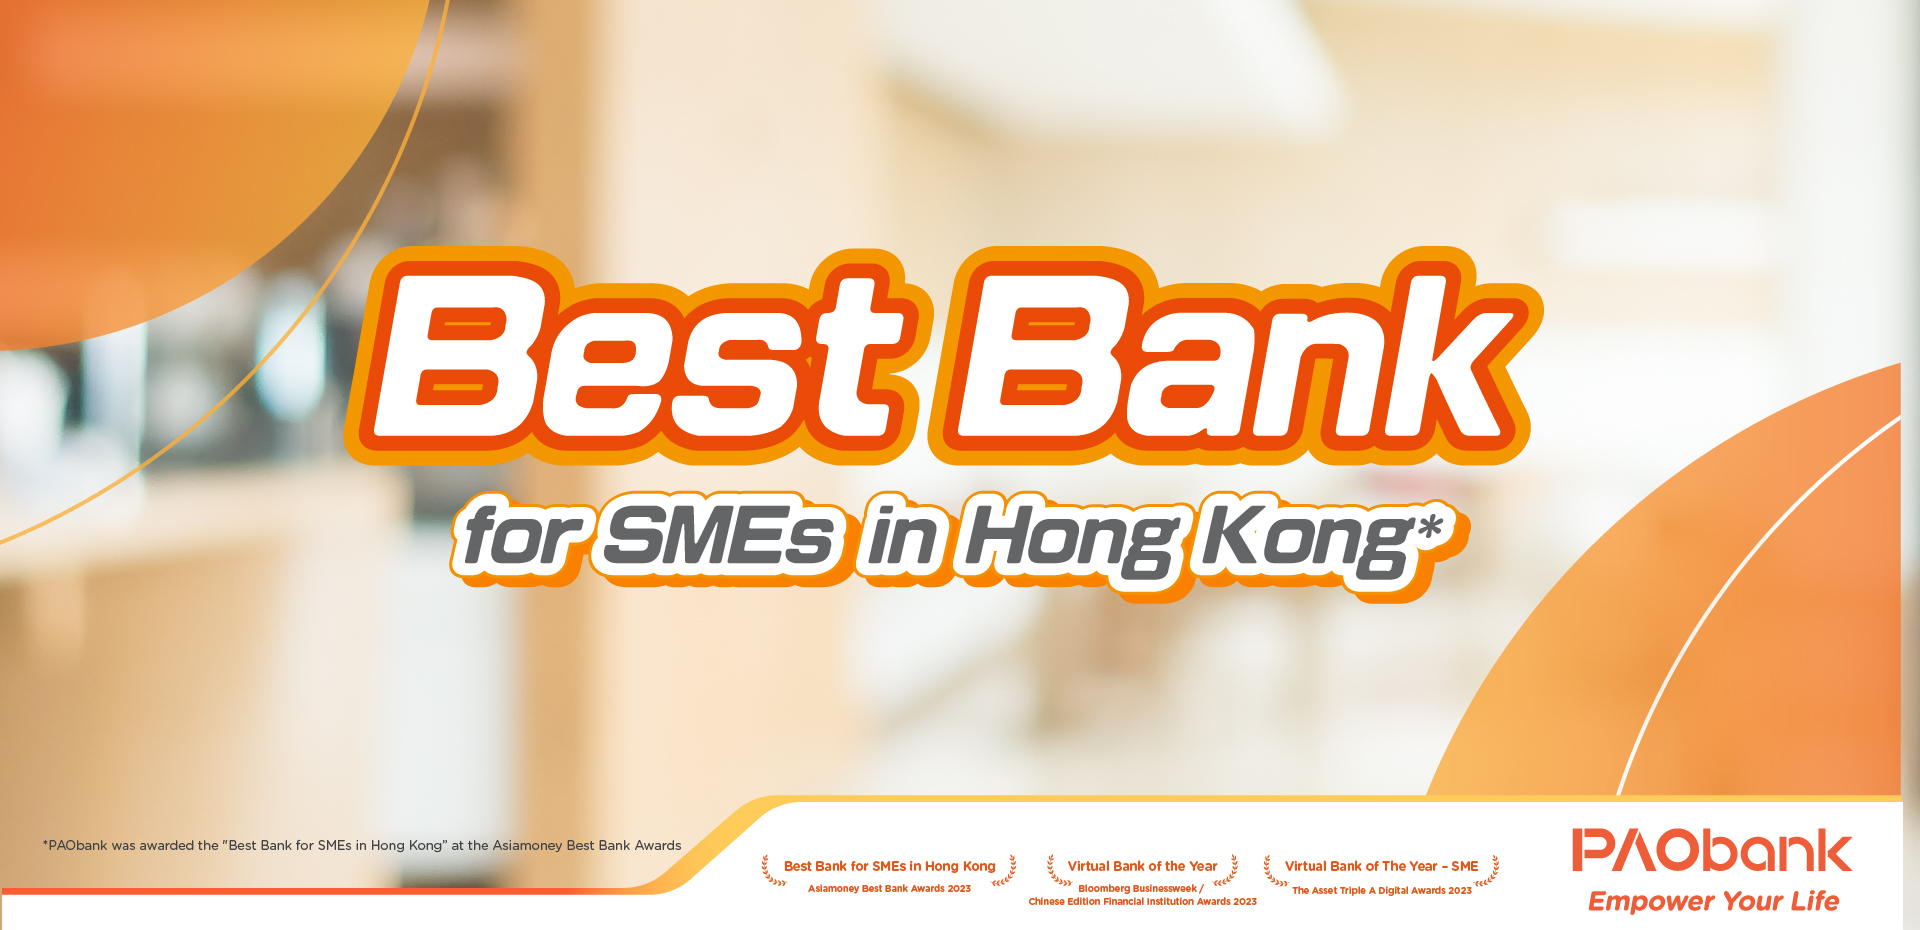 PAObank SME Services - PAObank SME Loan Cash Reward Offer